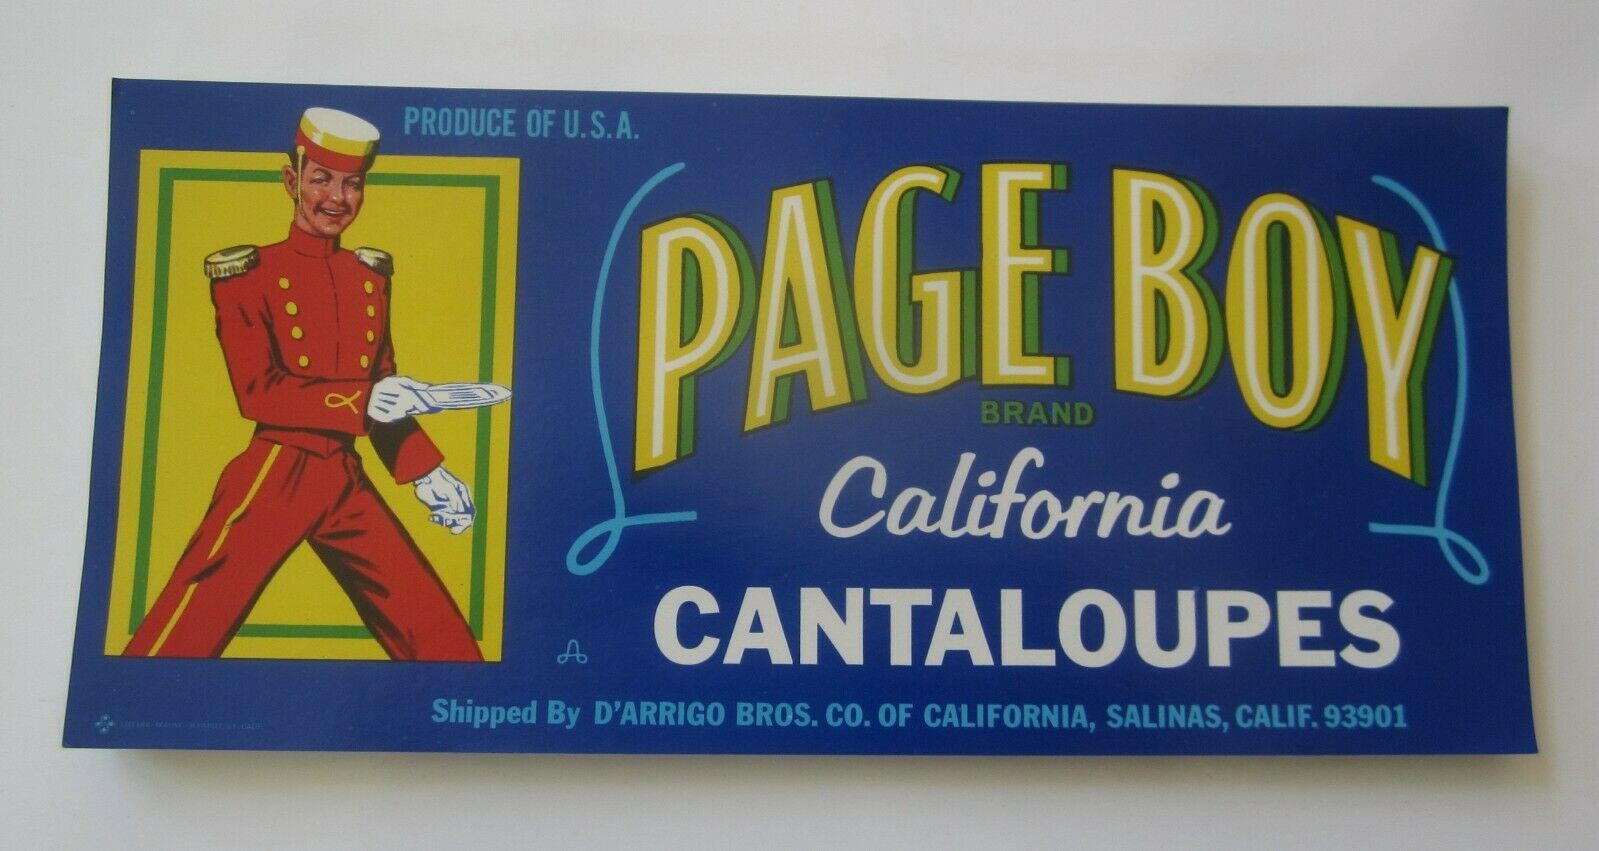  Lot of 100 Old Vintage - PAGE BOY - Cantaloupe...